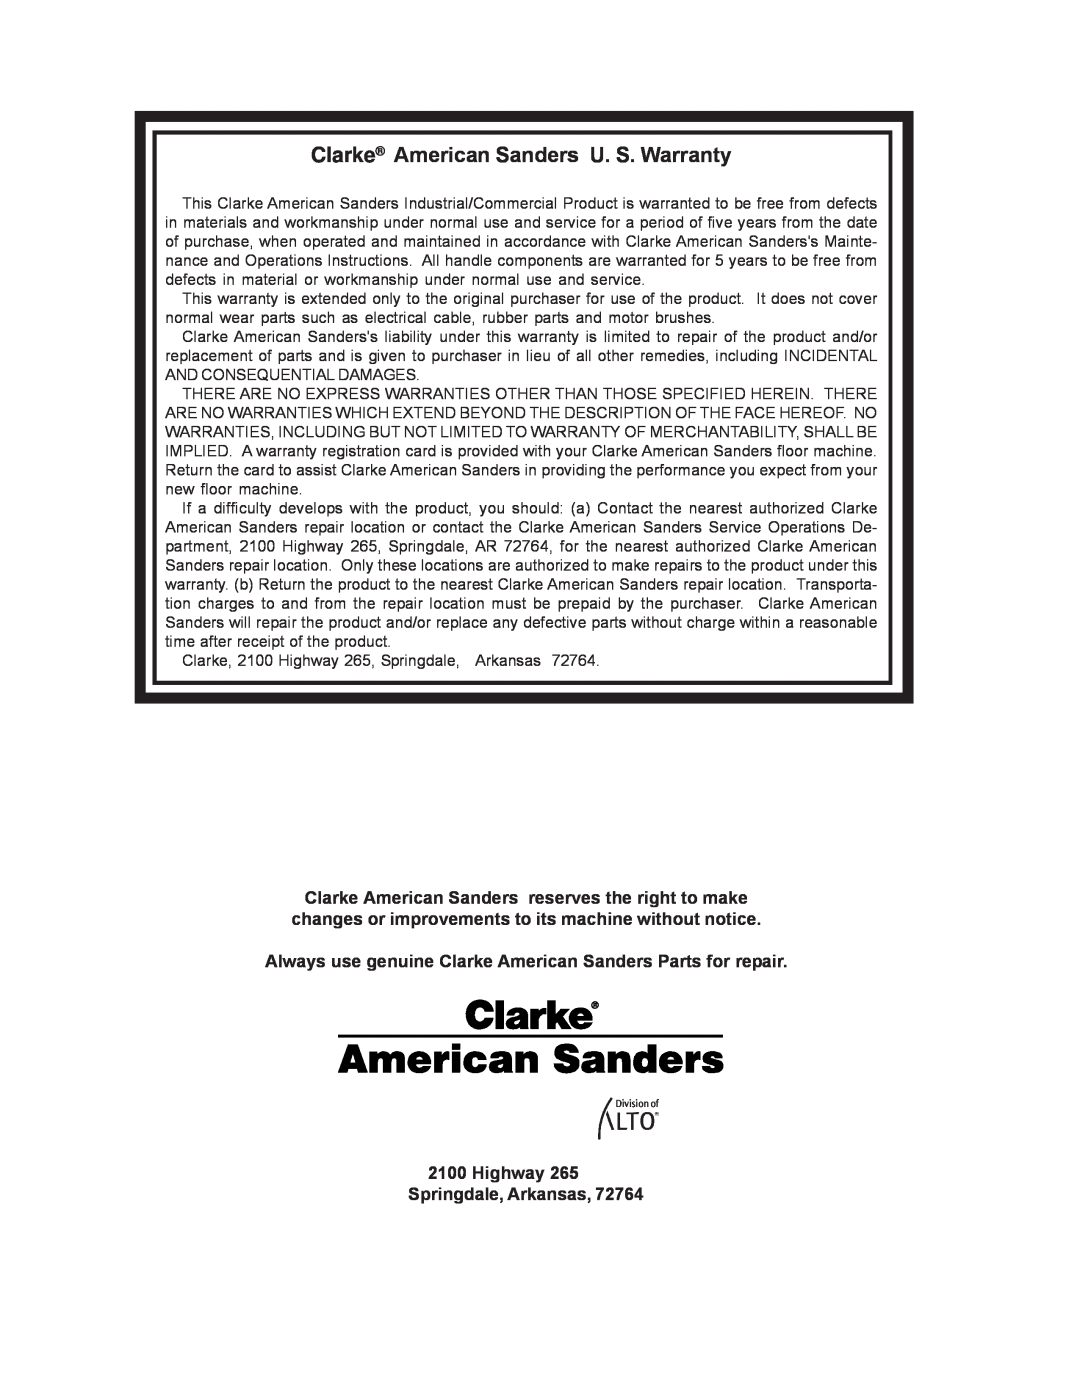 Nilfisk-ALTO C.A.V. 15 manual Clarke American Sanders U. S. Warranty, Highway 265 Springdale, Arkansas 